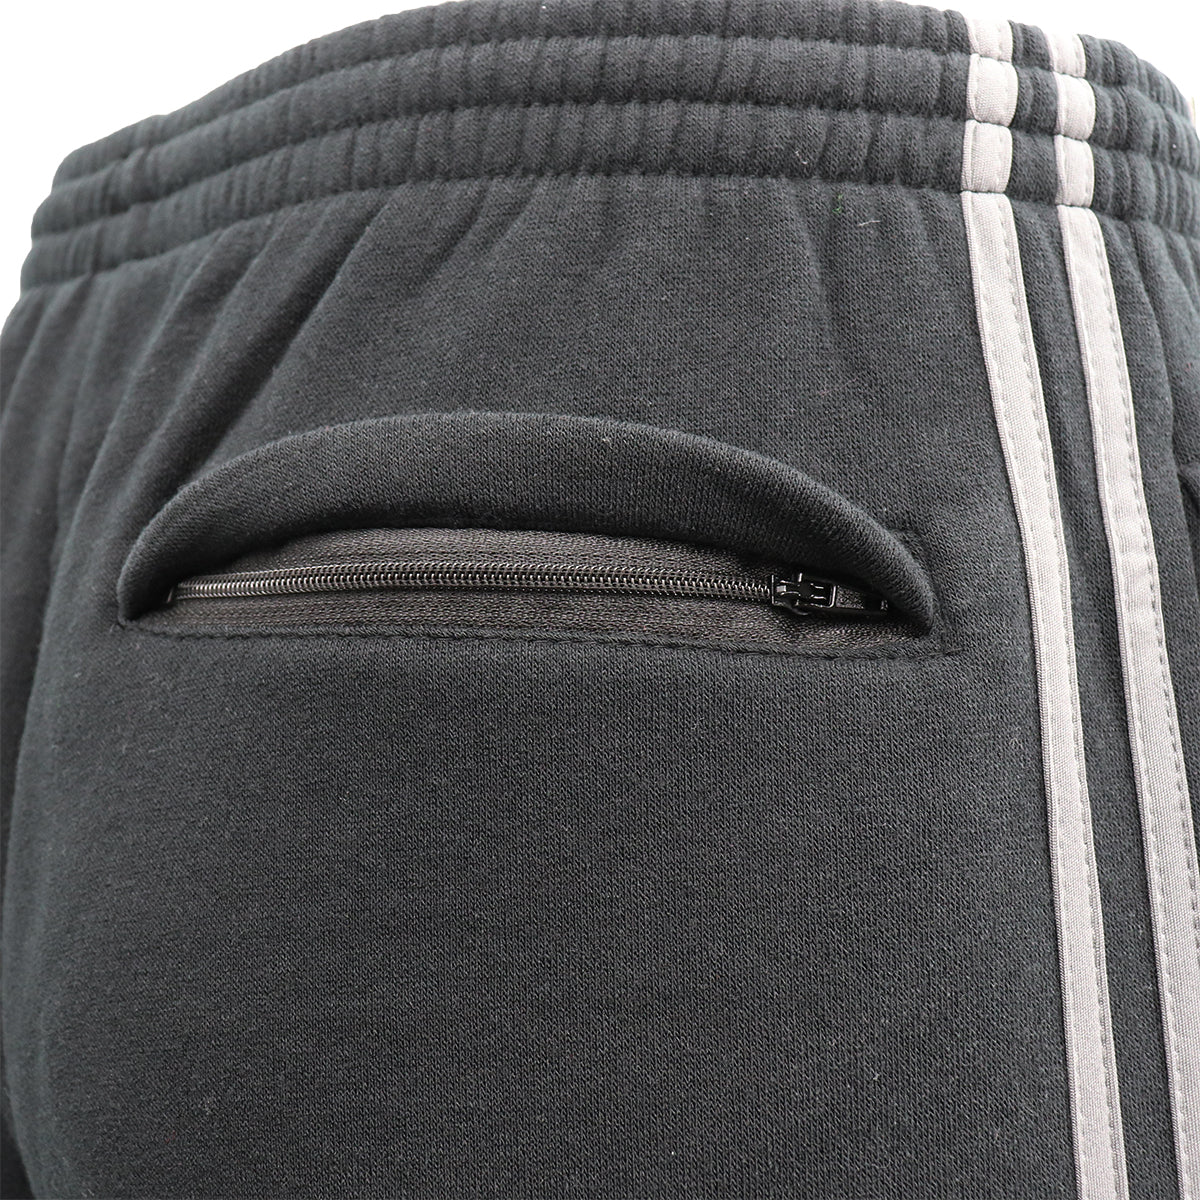 Men's Fleece Casual Sports Track Pants w Zip Pocket Striped Sweat Trousers S-6XL, Black w Grey Stripes, M